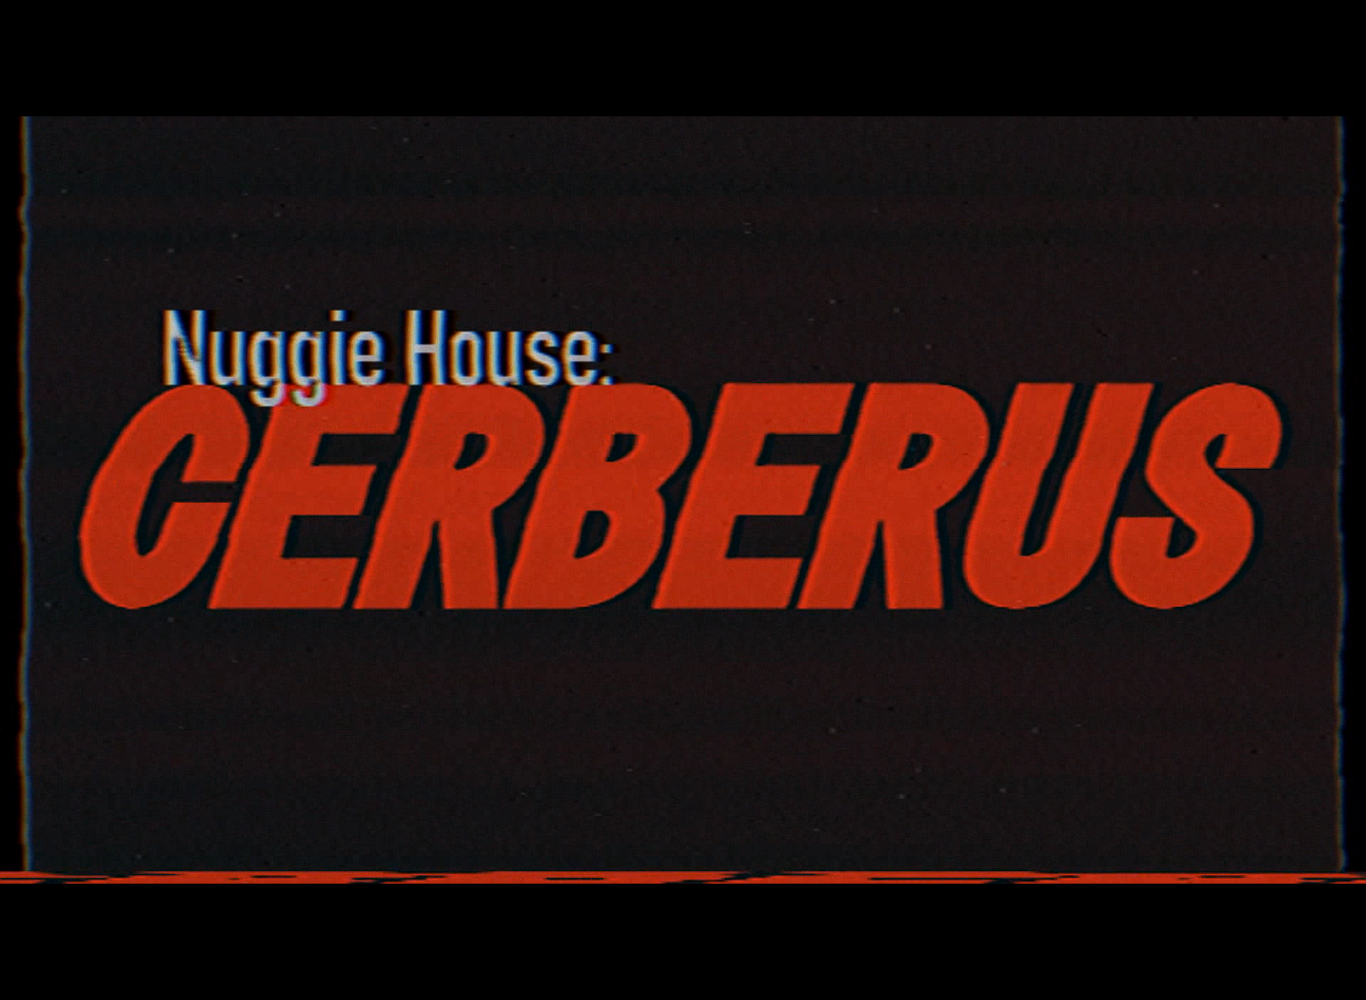 Nuggie House: Cerberus